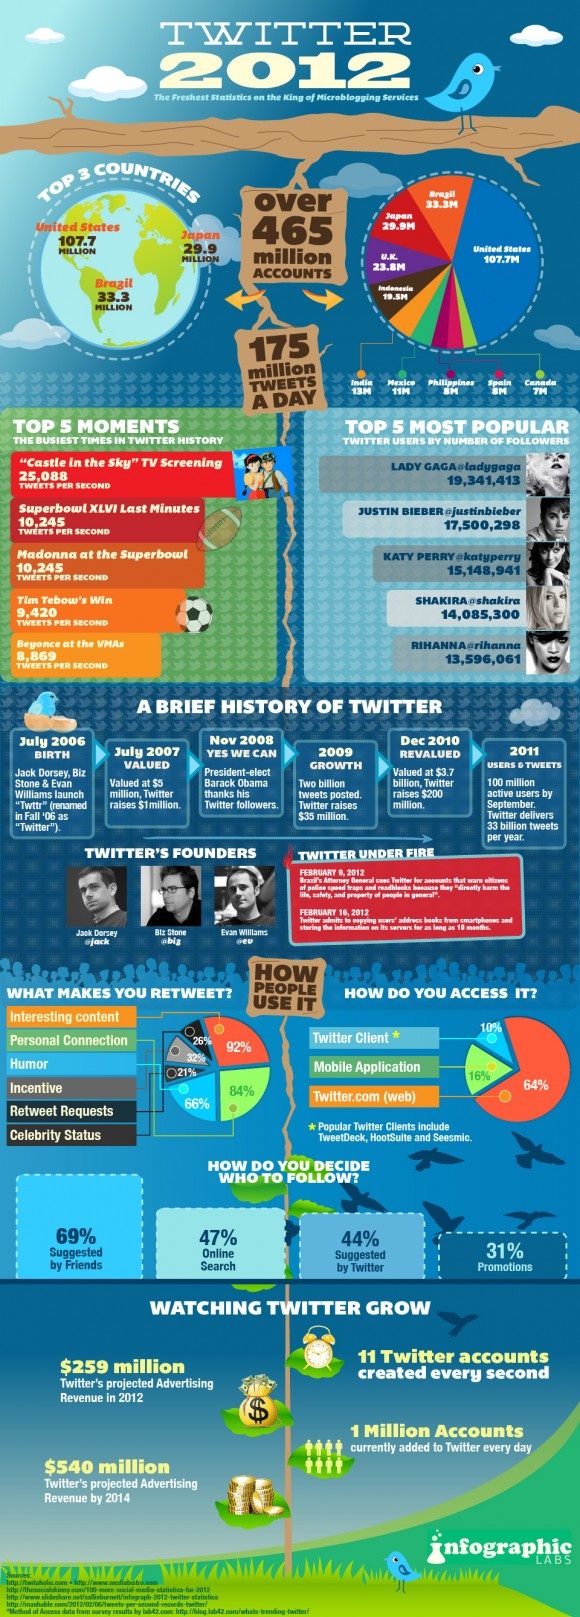 Twitter-2012